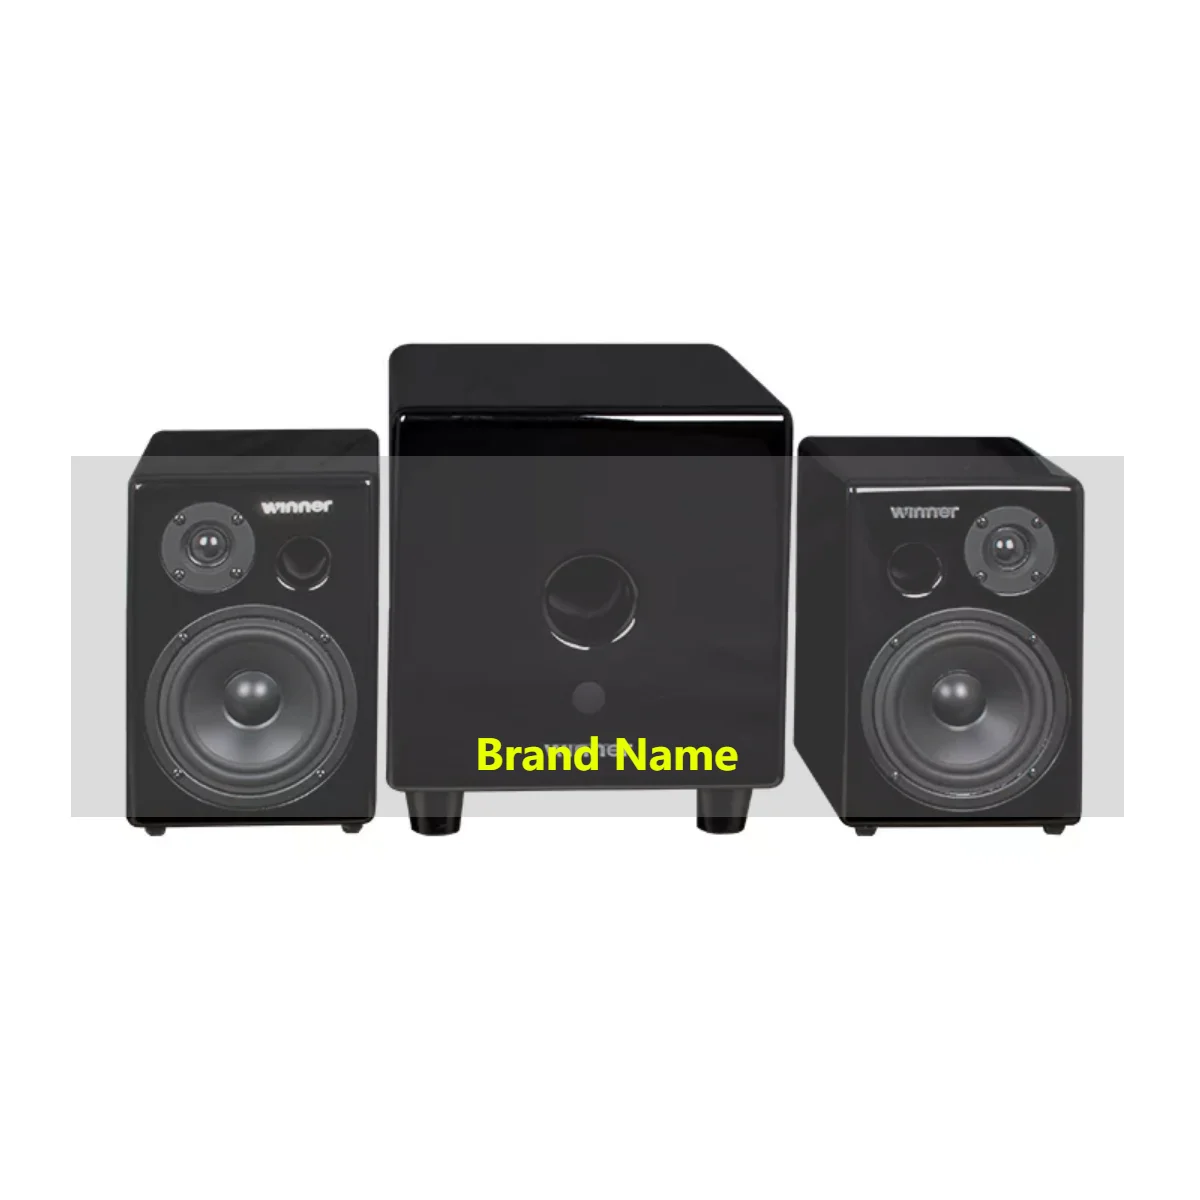 ToneWinner studio monitor adam audio outdoor smart boombox bass subwoofer wireless sound equipment amplifier speaker enlarge